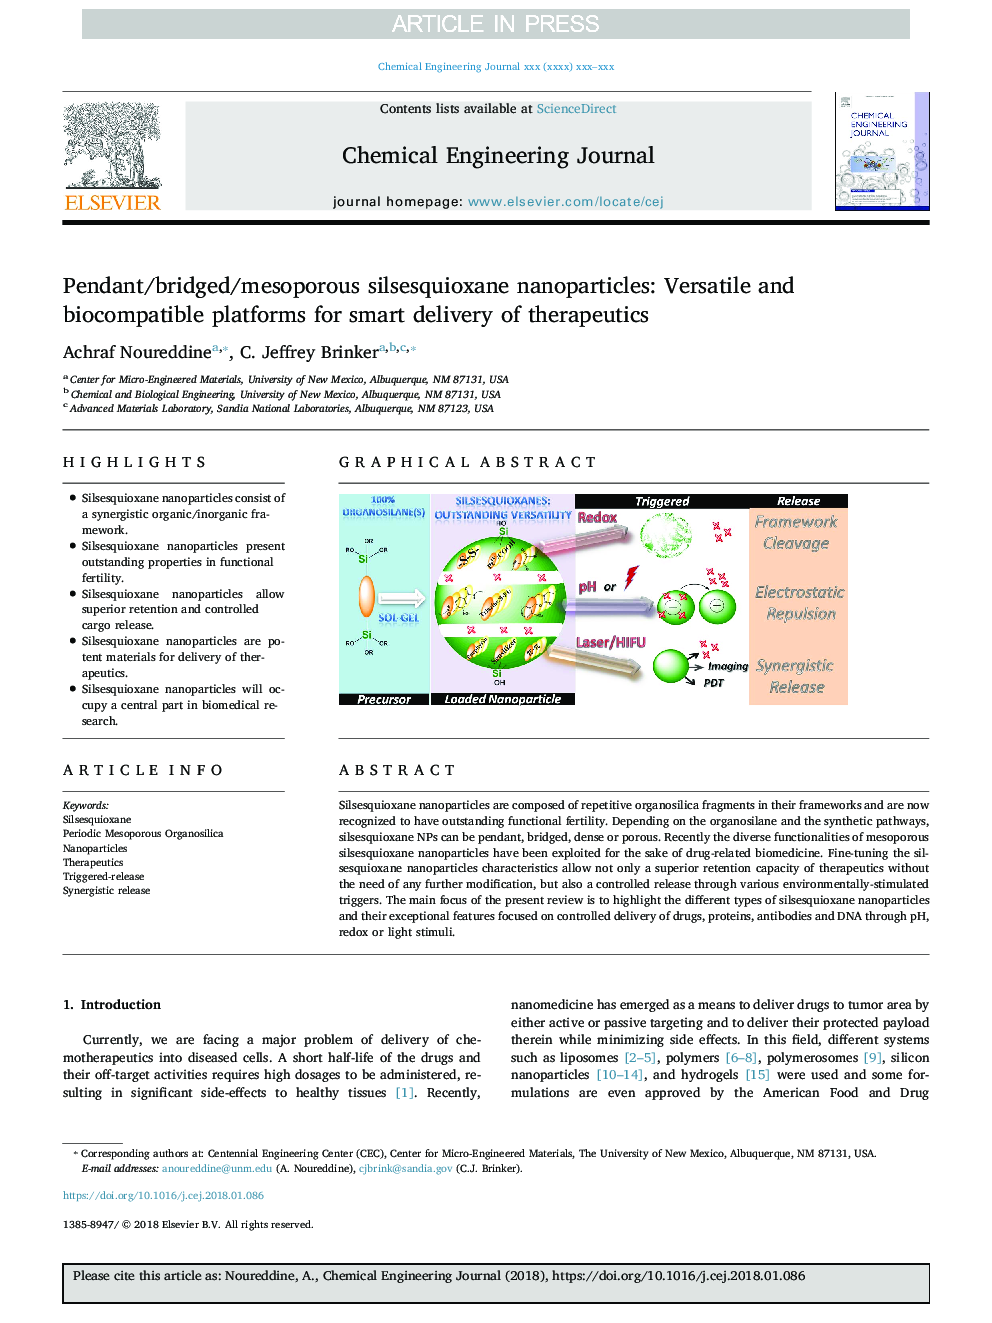 Pendant/bridged/mesoporous silsesquioxane nanoparticles: Versatile and biocompatible platforms for smart delivery of therapeutics